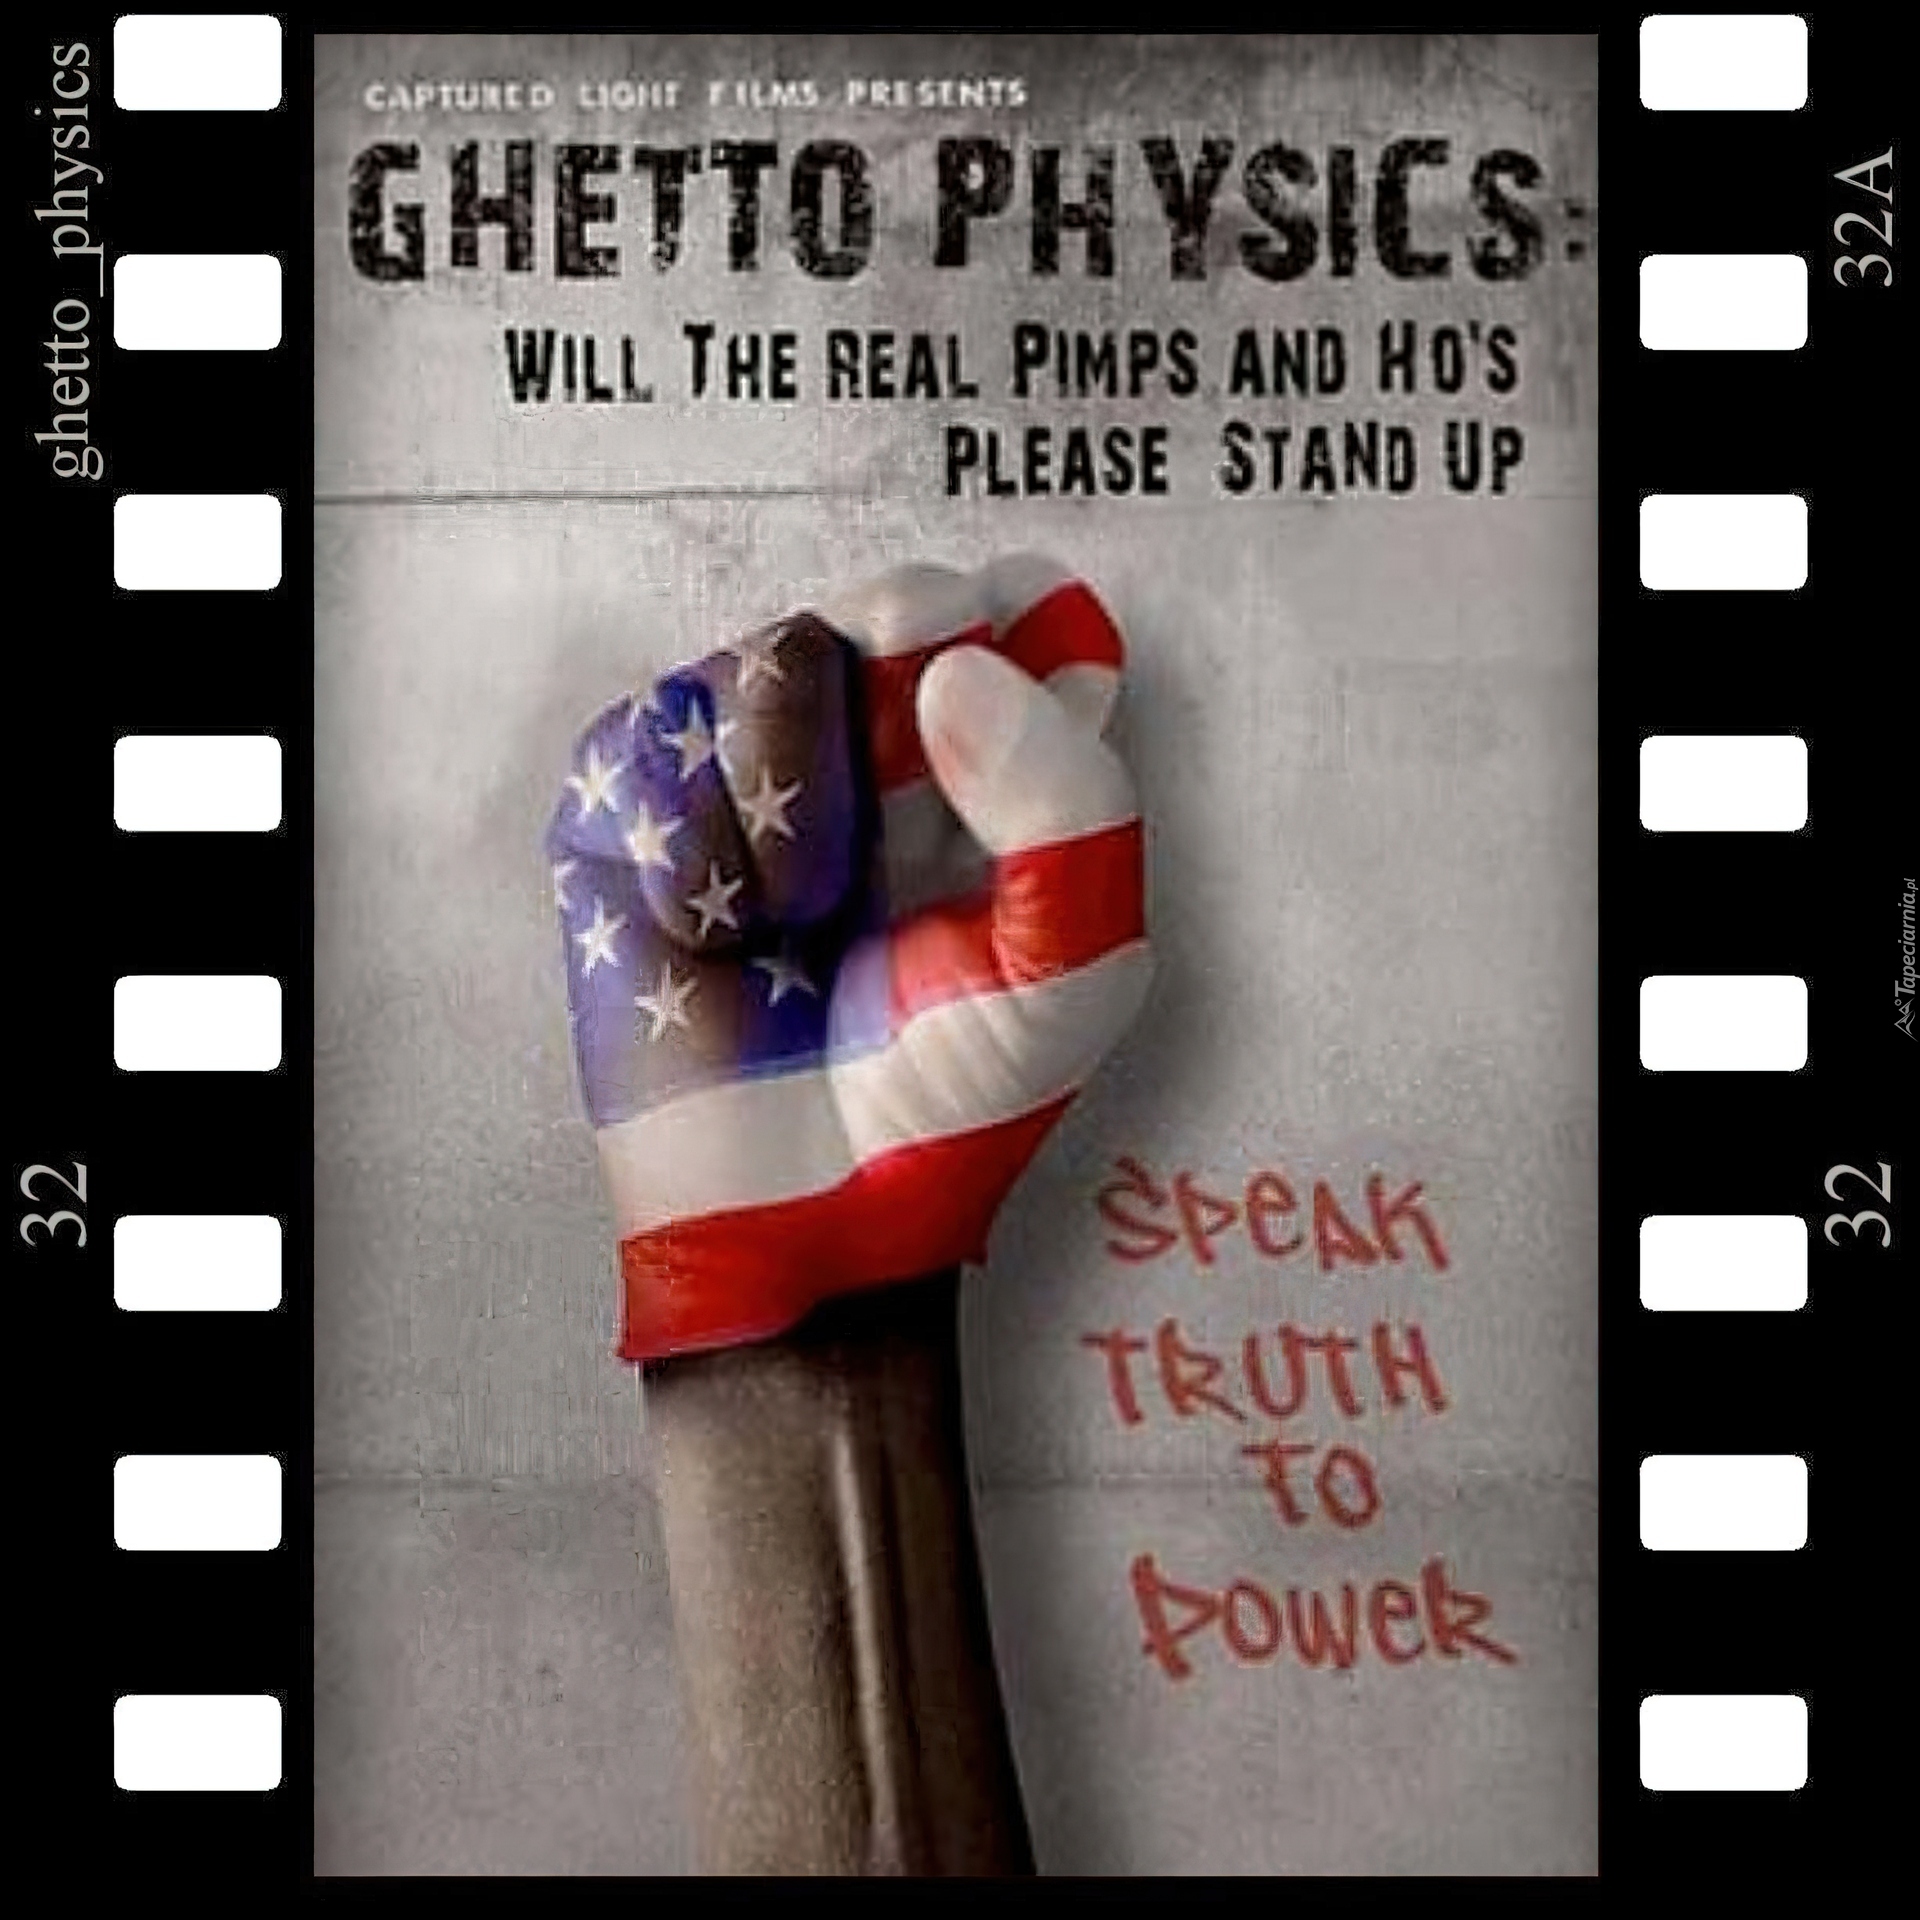 Film, Ghetto Physics